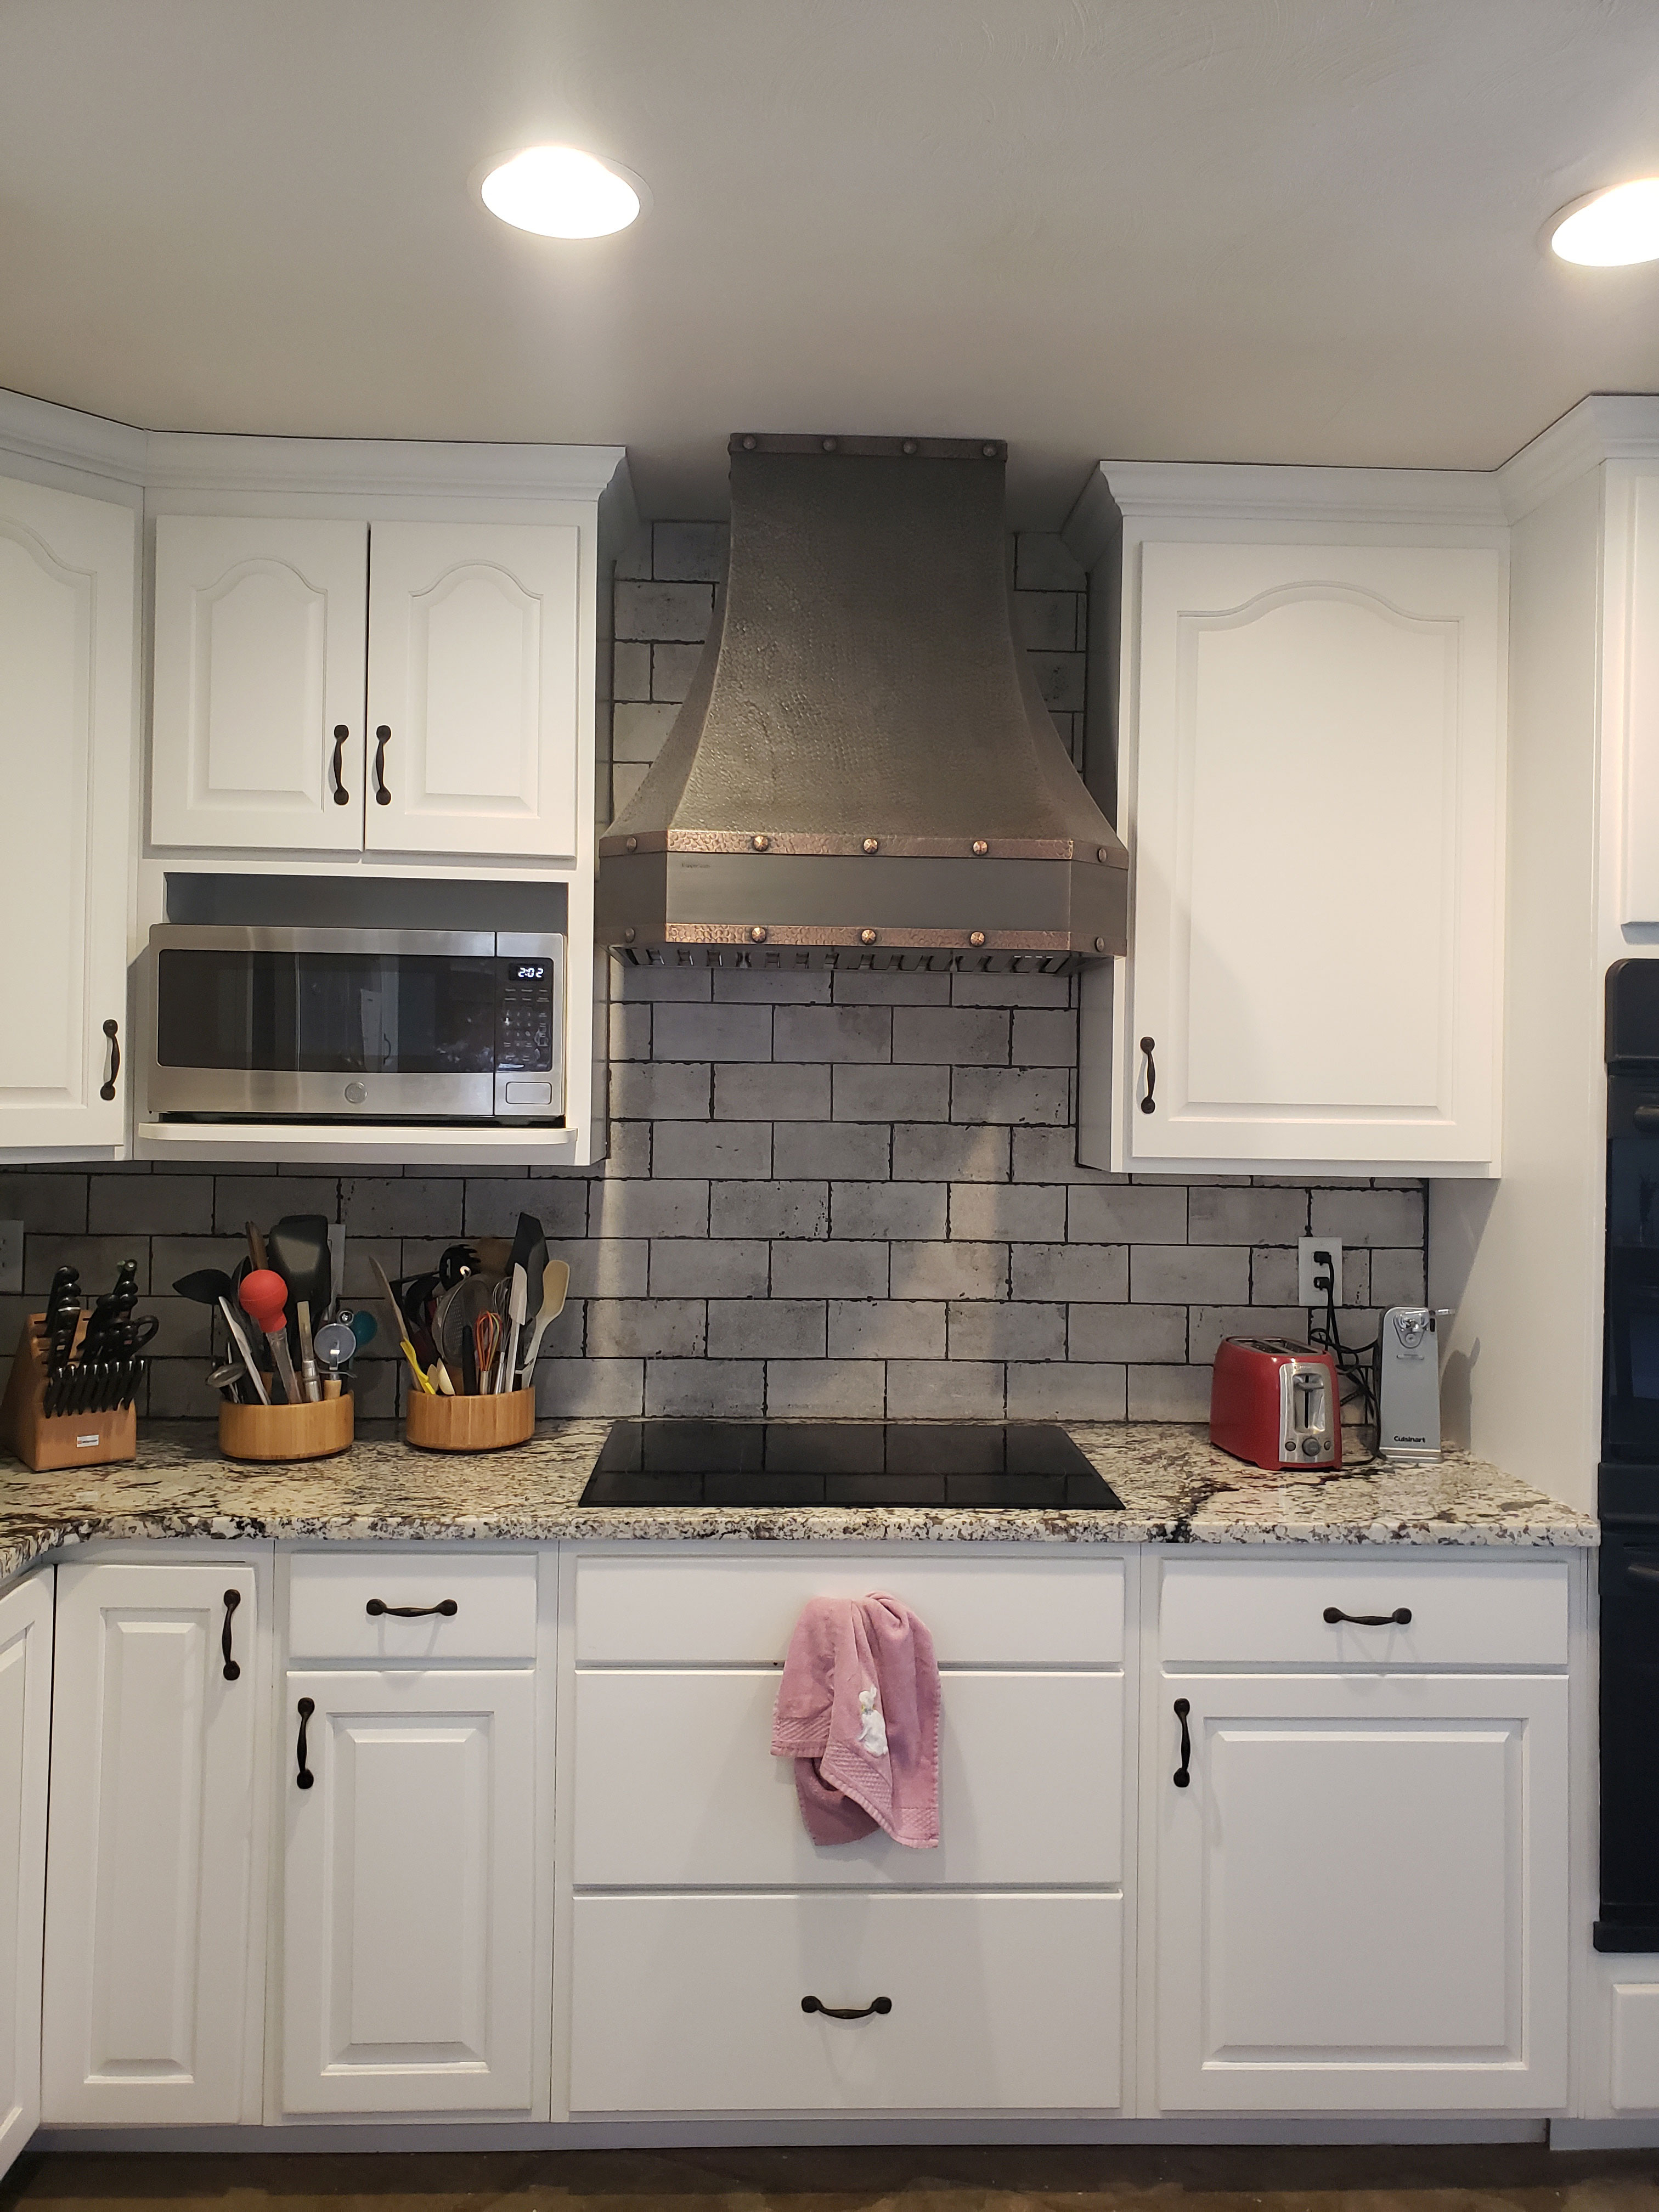 Beautiful french kitchen design with stylish range hood and white kitchen cabinets, marble kitchen countertops and brick backsplash